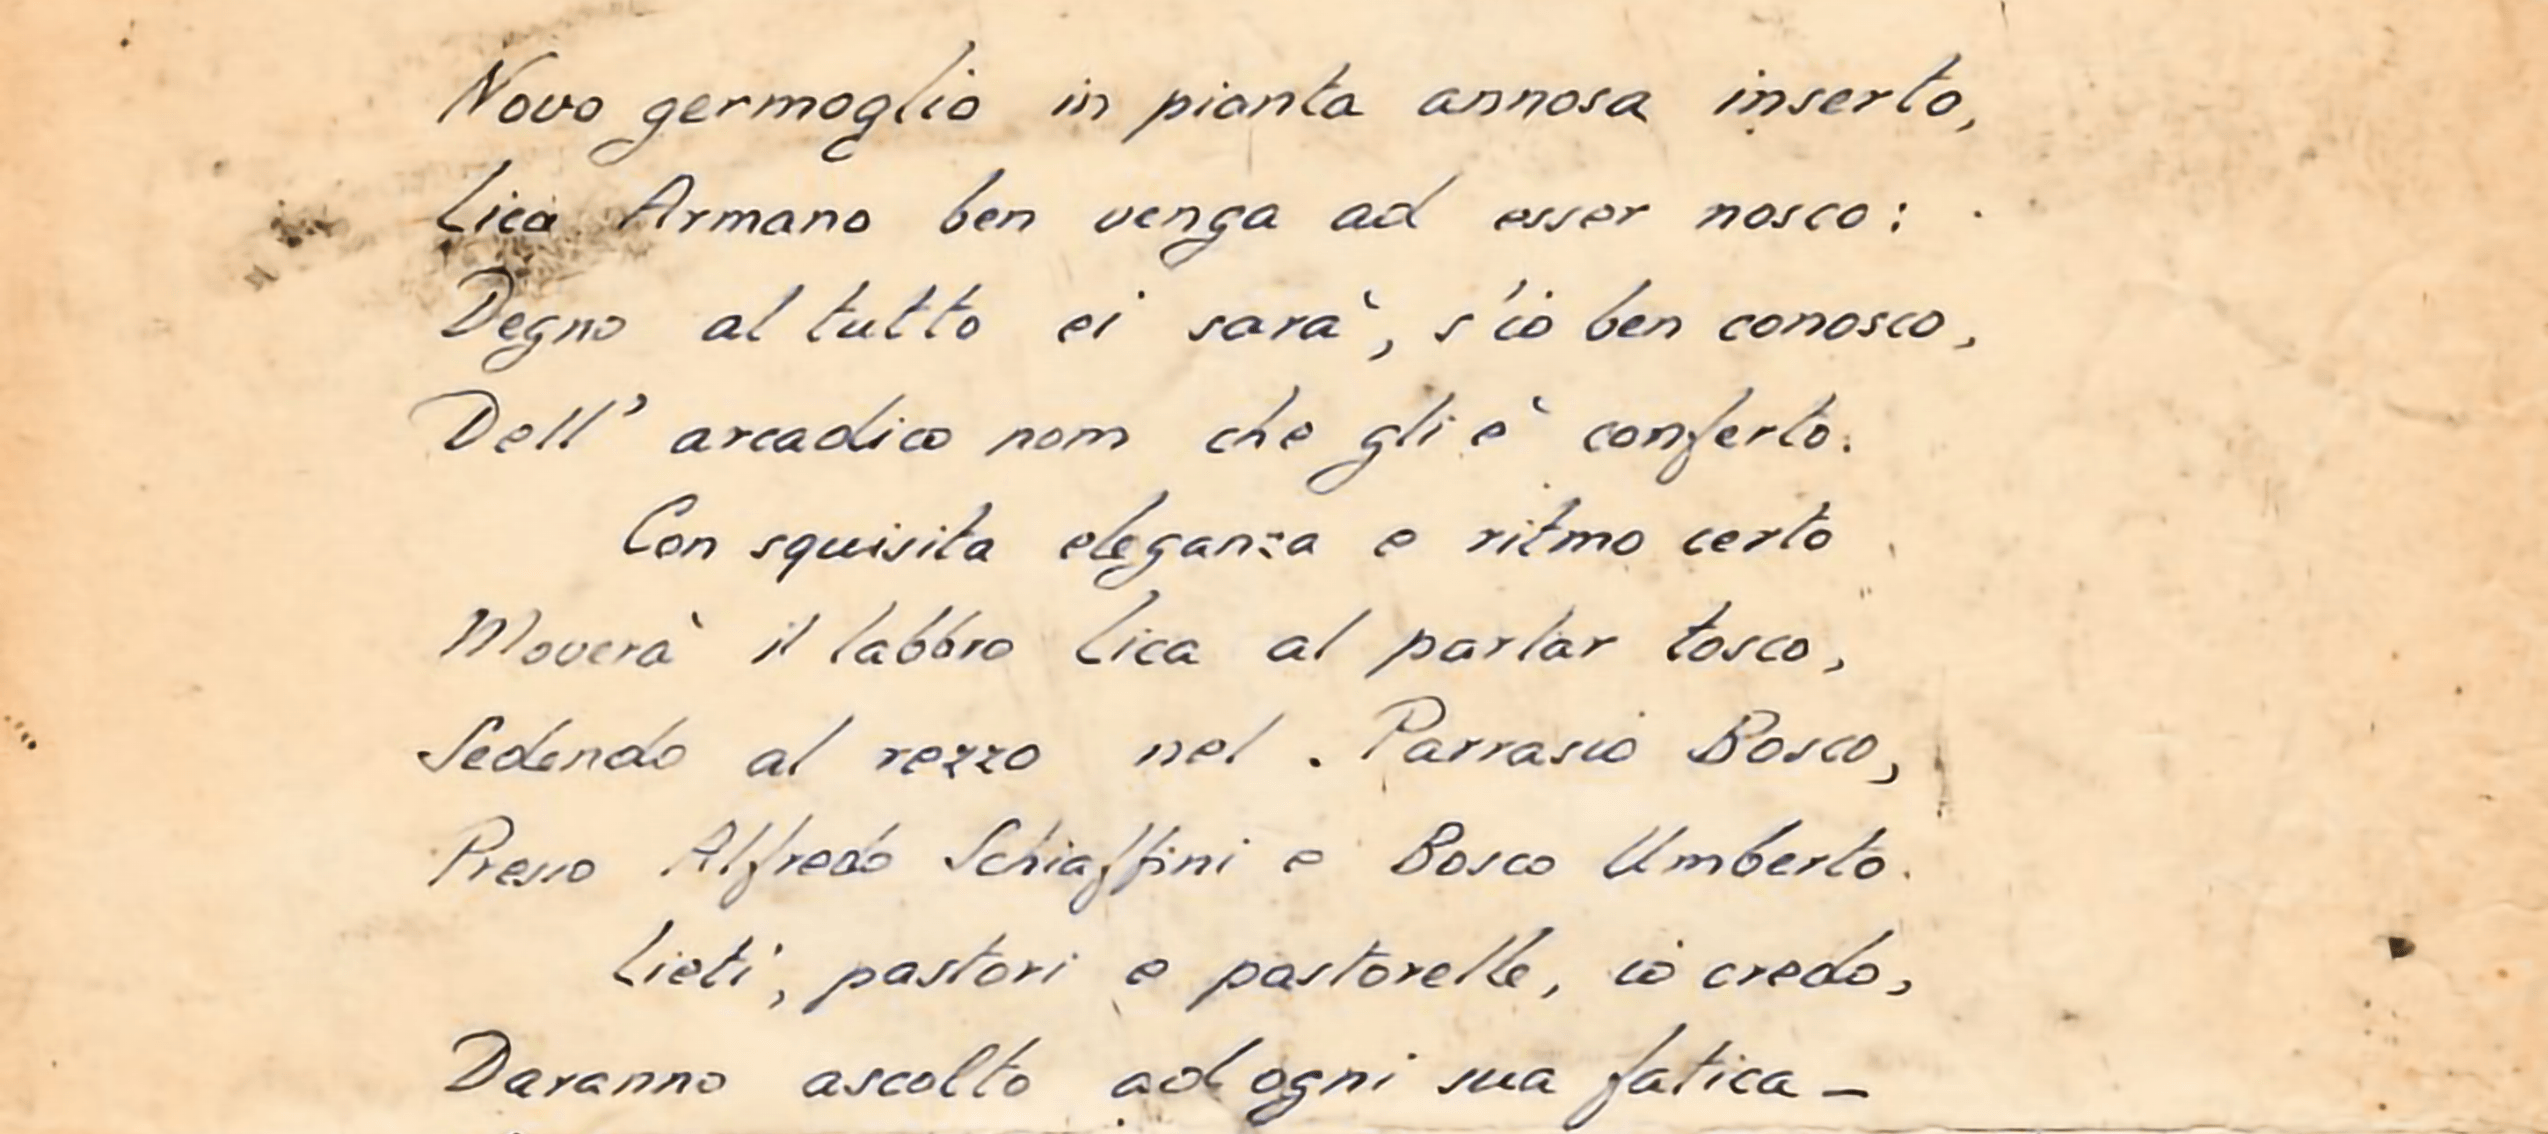 Fotografia di una lettera scritta da Guido Martellotti a W. Theodor Elwert